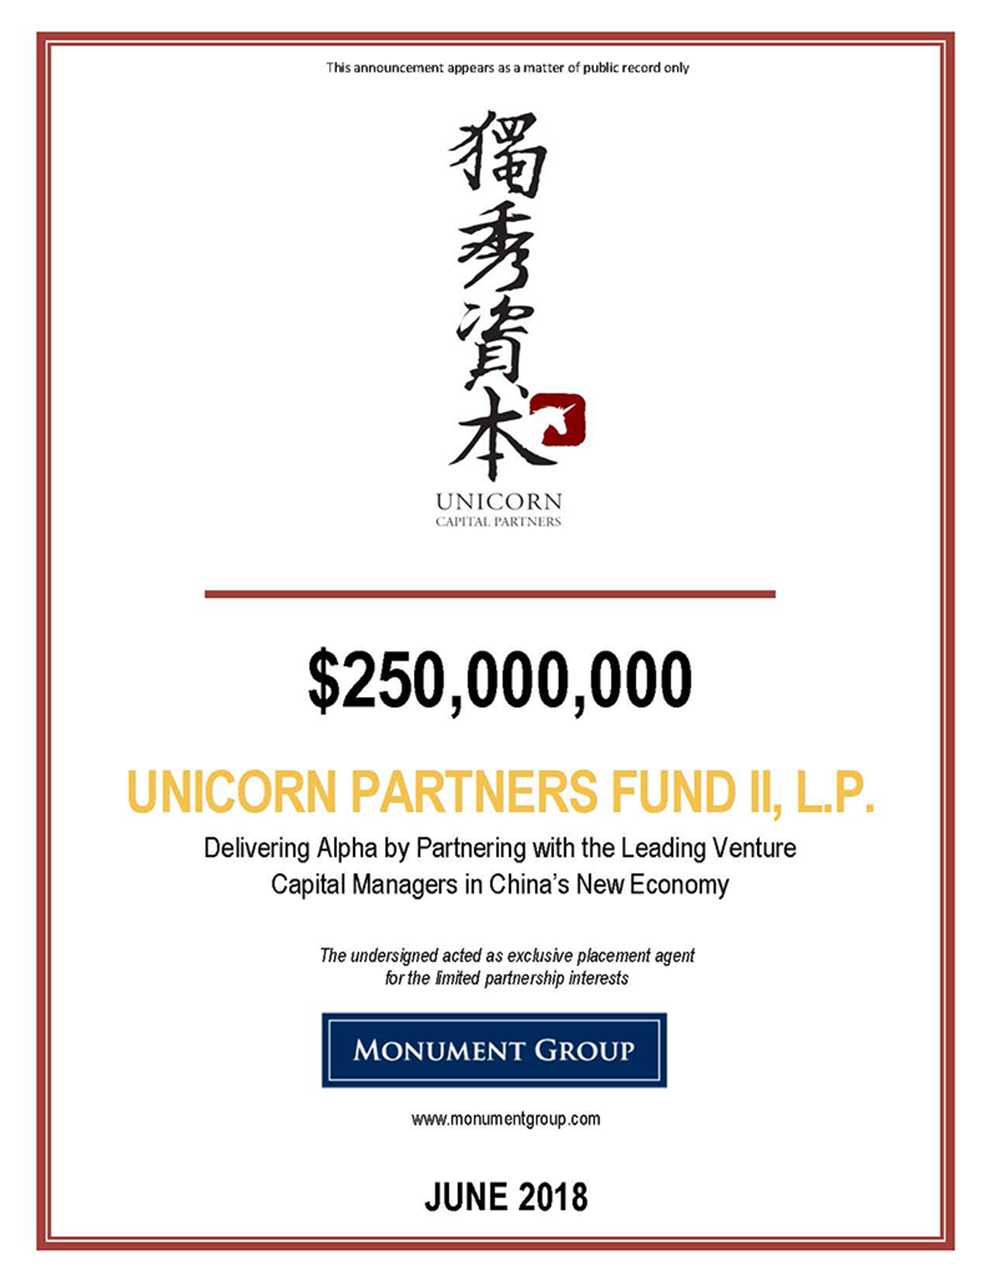 Unicorn Partners Fund II